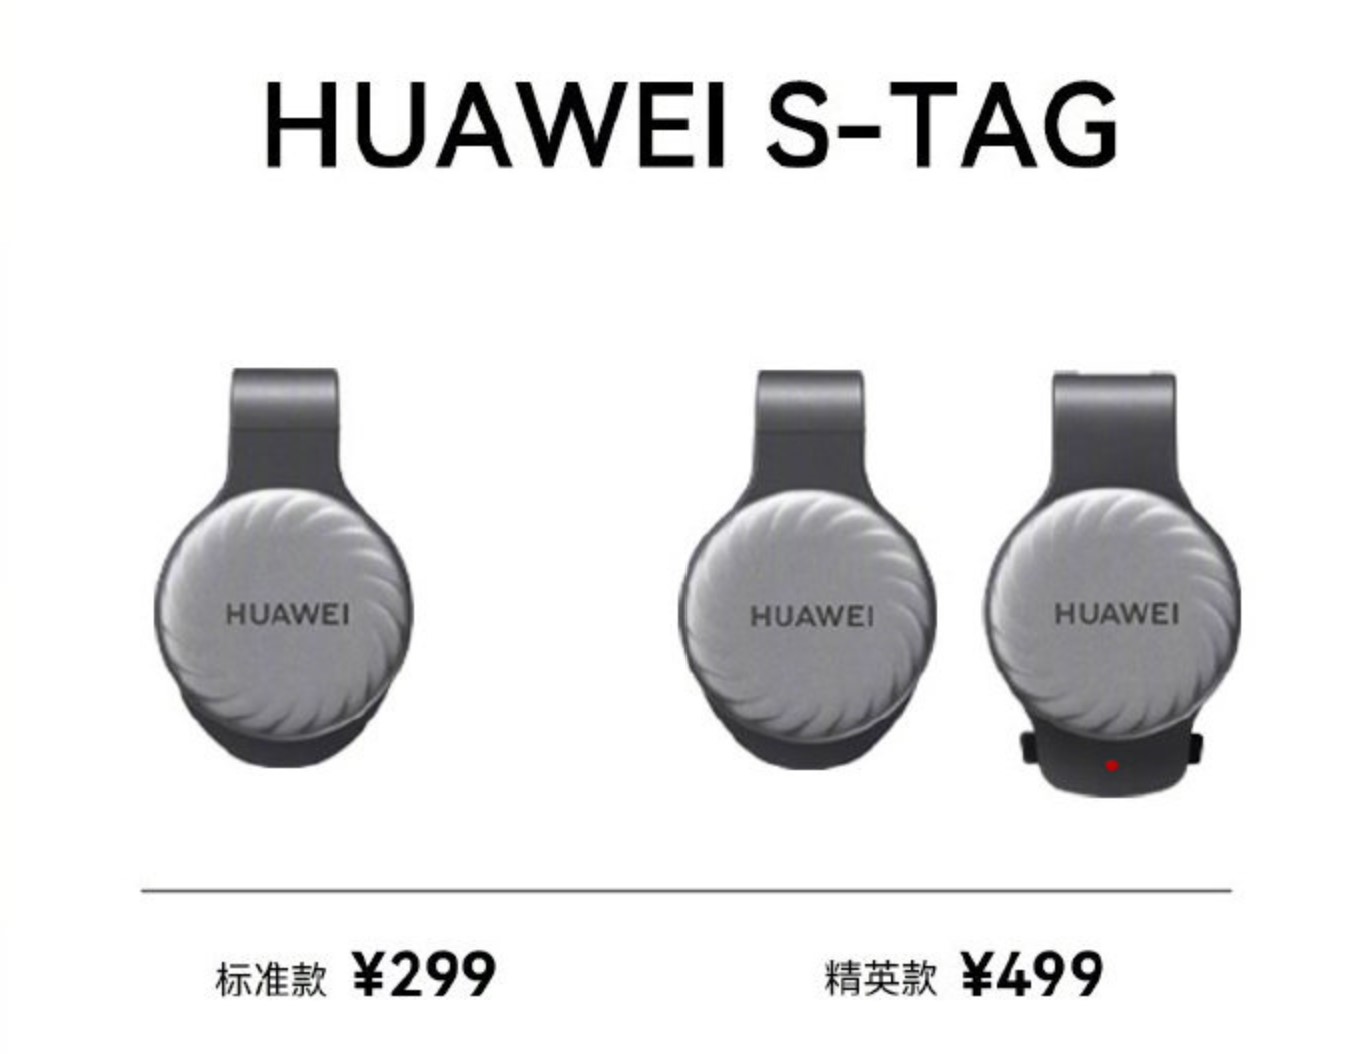 Sensor de movimiento profesional Huawei S-TAG